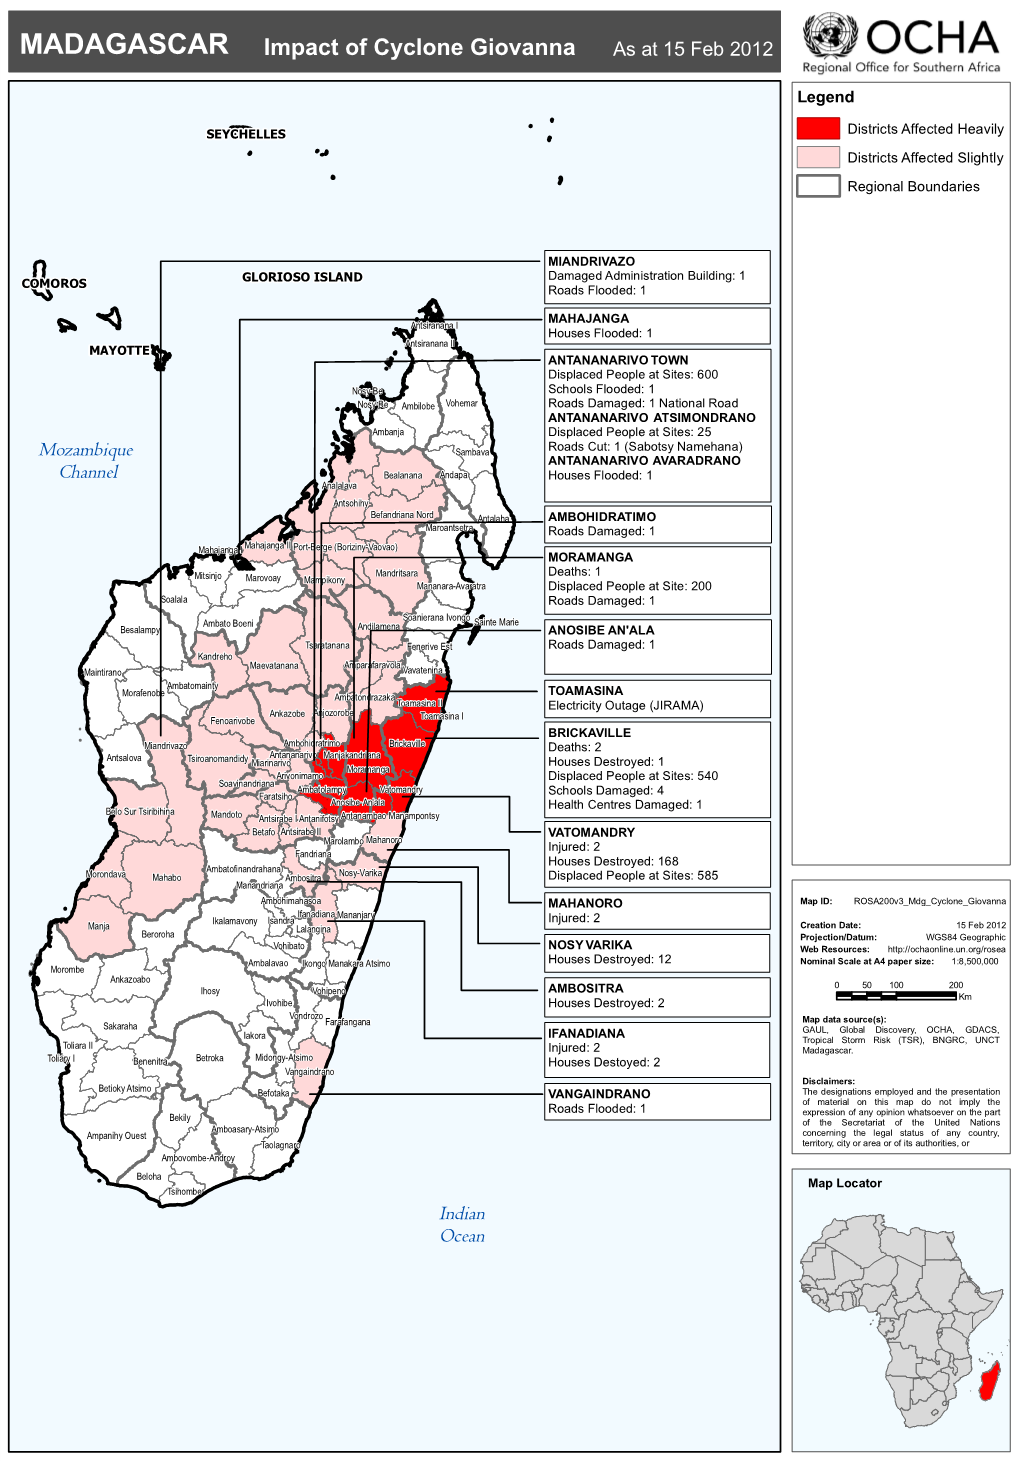 MADAGASCAR Impact of Cyclone Giovanna As at 15 Feb 2012